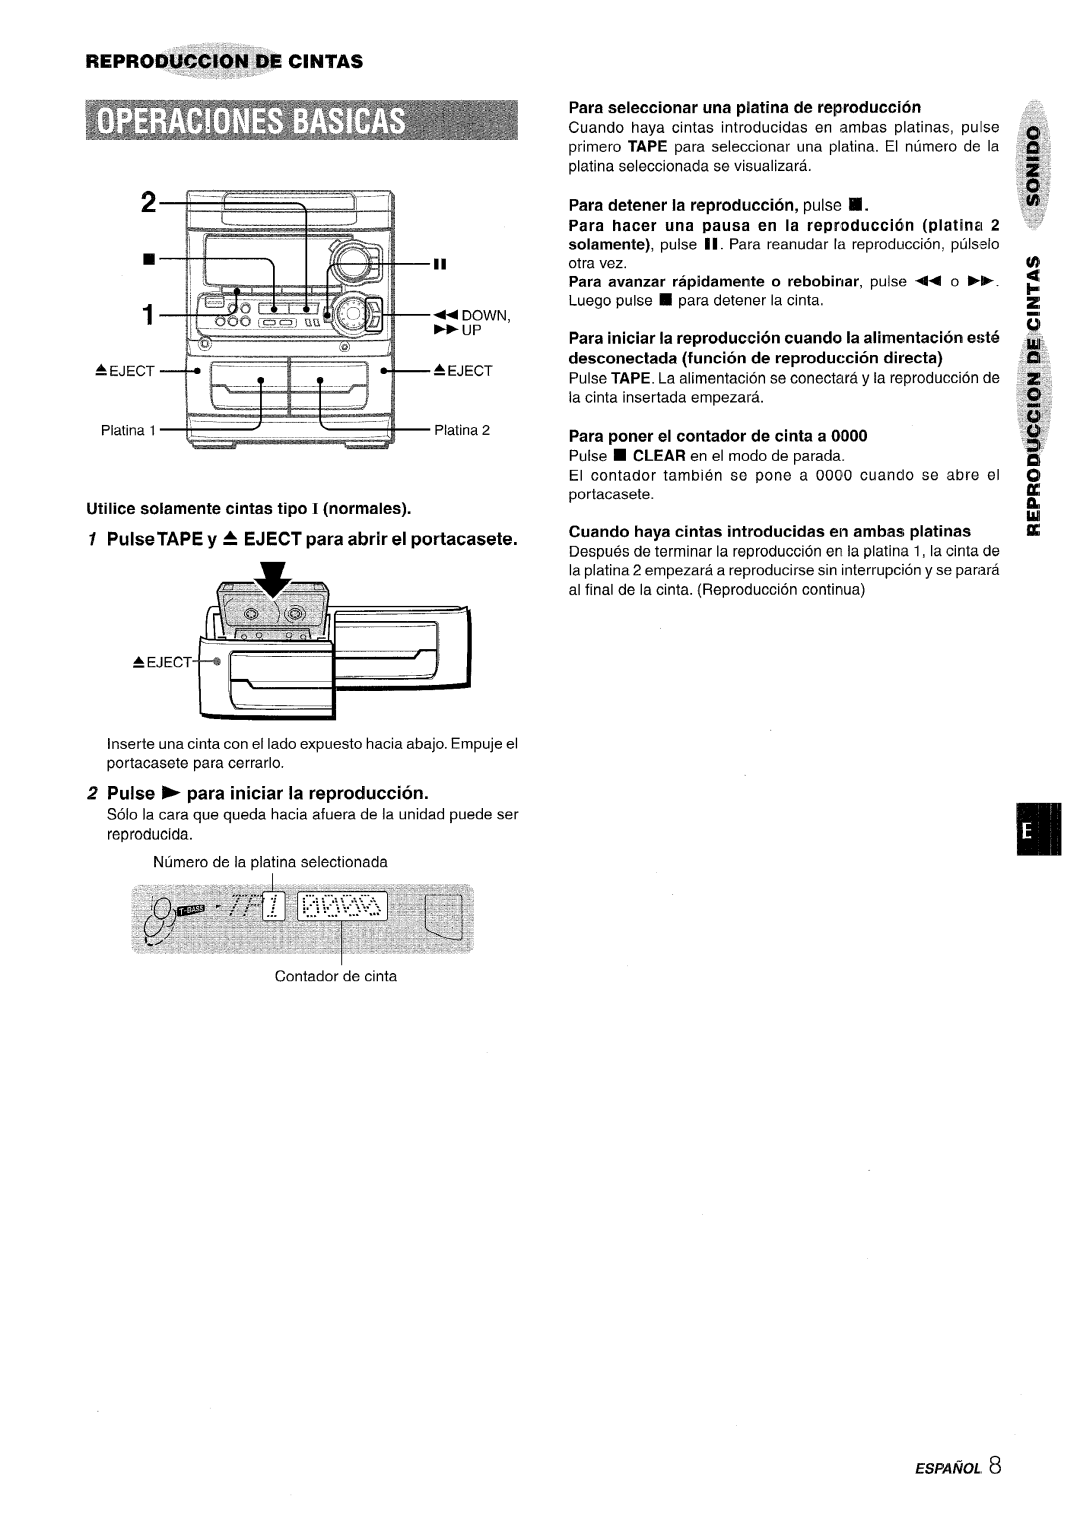 Sony SX-MT321, NSX-MT320 manual PulseTAPE y A EJECT para abrir el portacasete, Pulse para iniciar la reproduction, “ ““” 